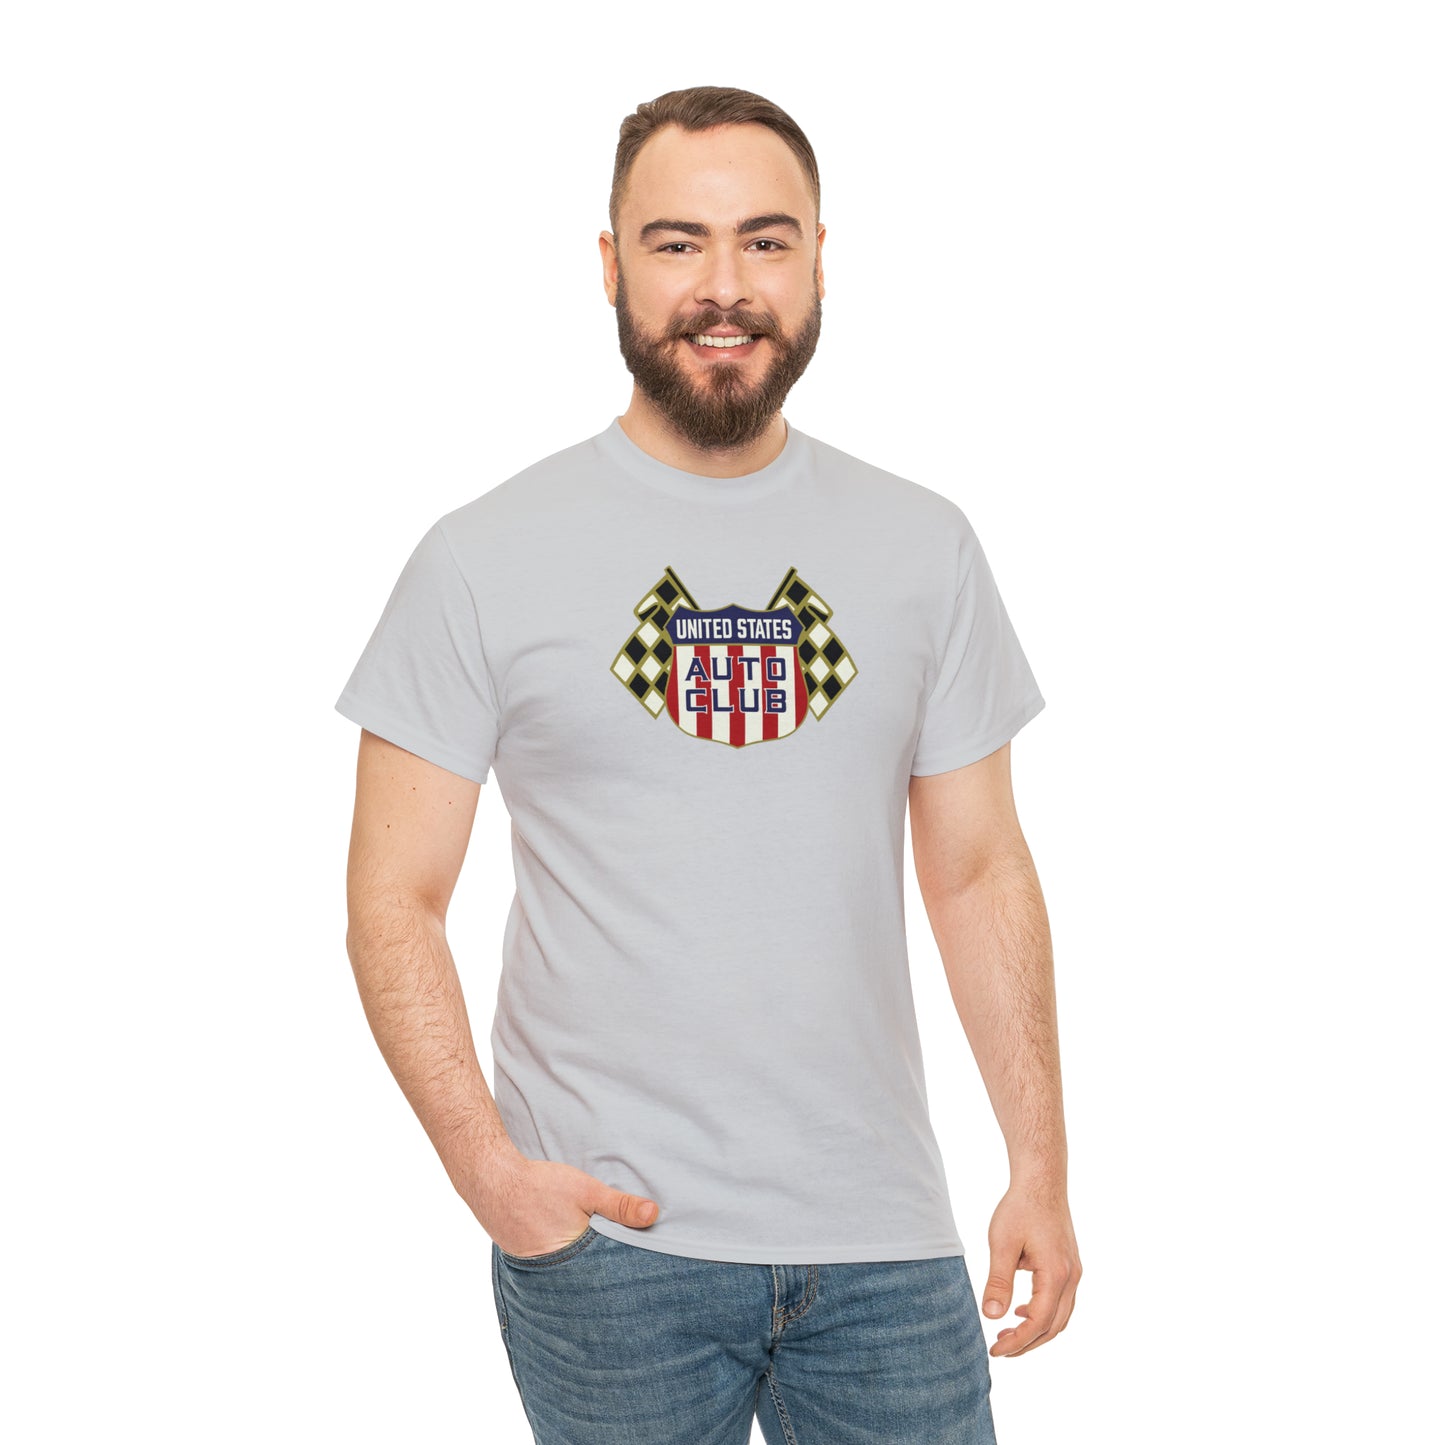 U.S. Auto Club T-Shirt